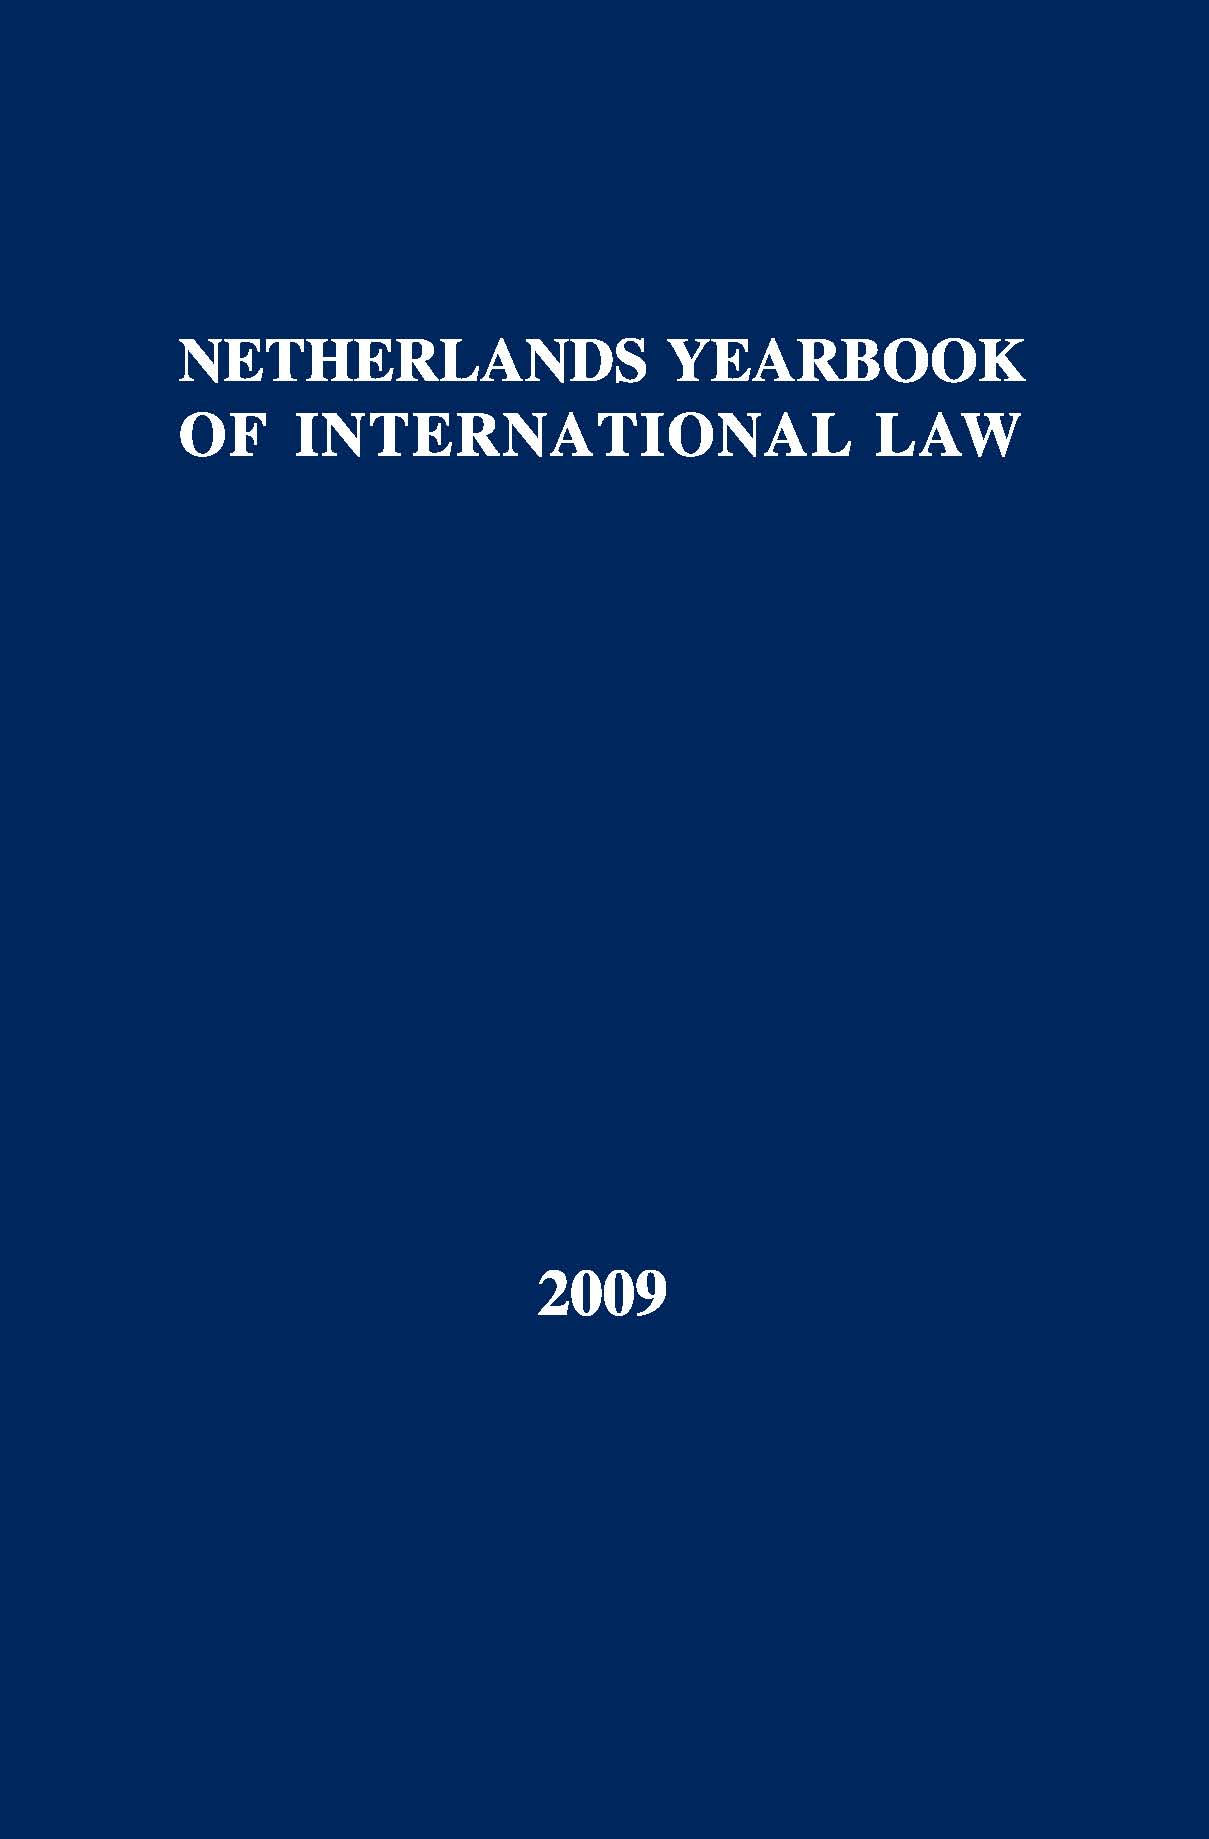 Netherlands Yearbook of International Law 2009, Volume 40